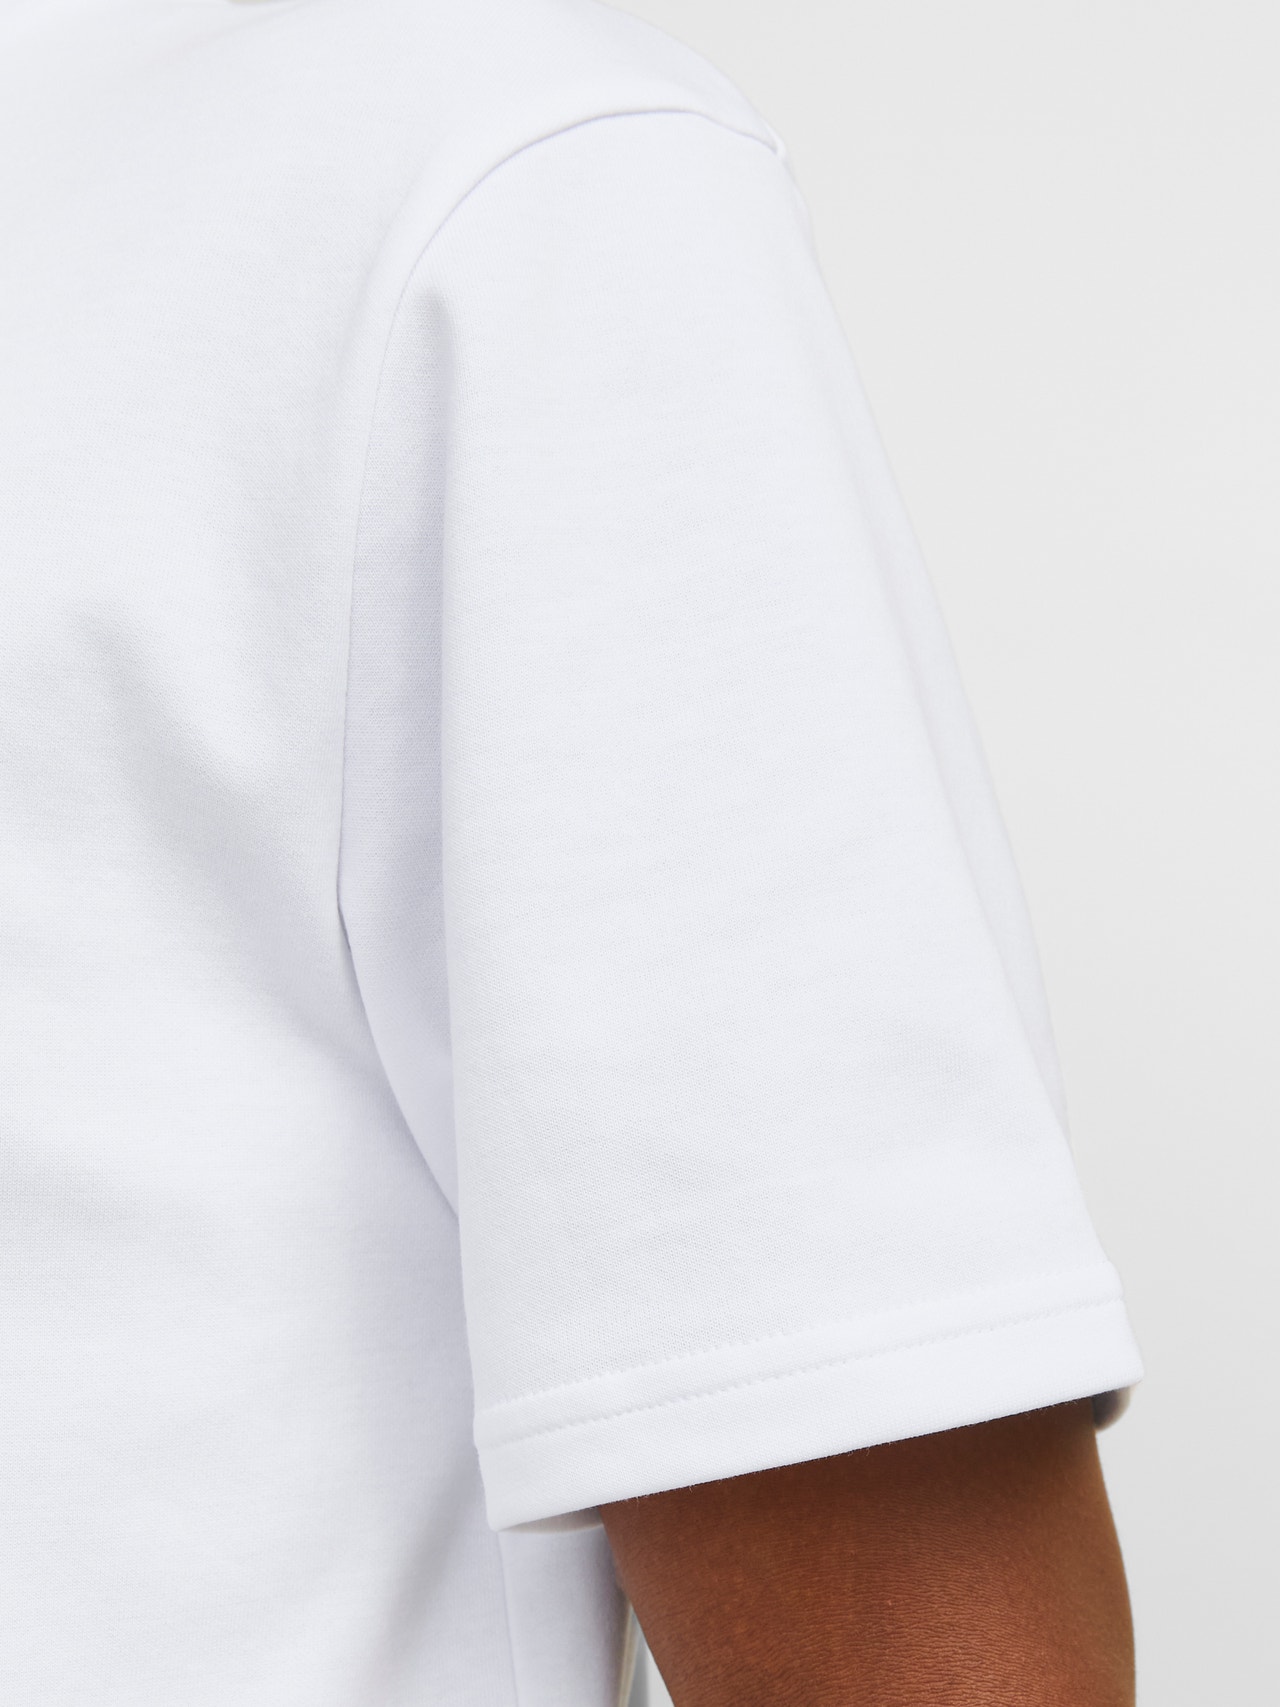 Jack & Jones Printed Crew neck T-shirt -White - 12254988